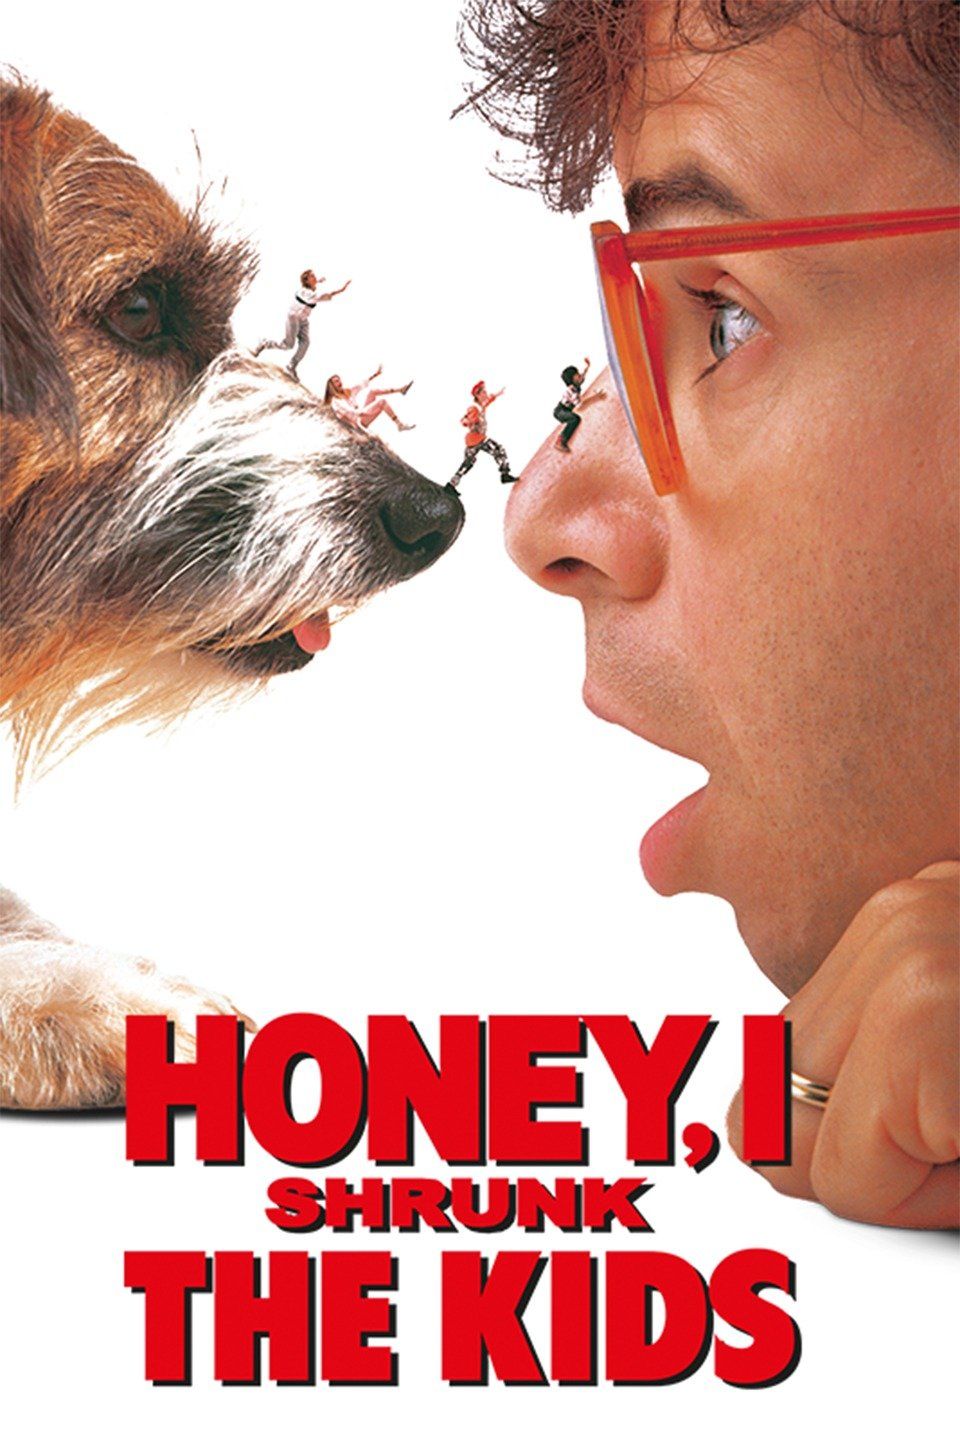 Watch Honey, I Shrunk the Kids (1989) Full Movie Online - Plex